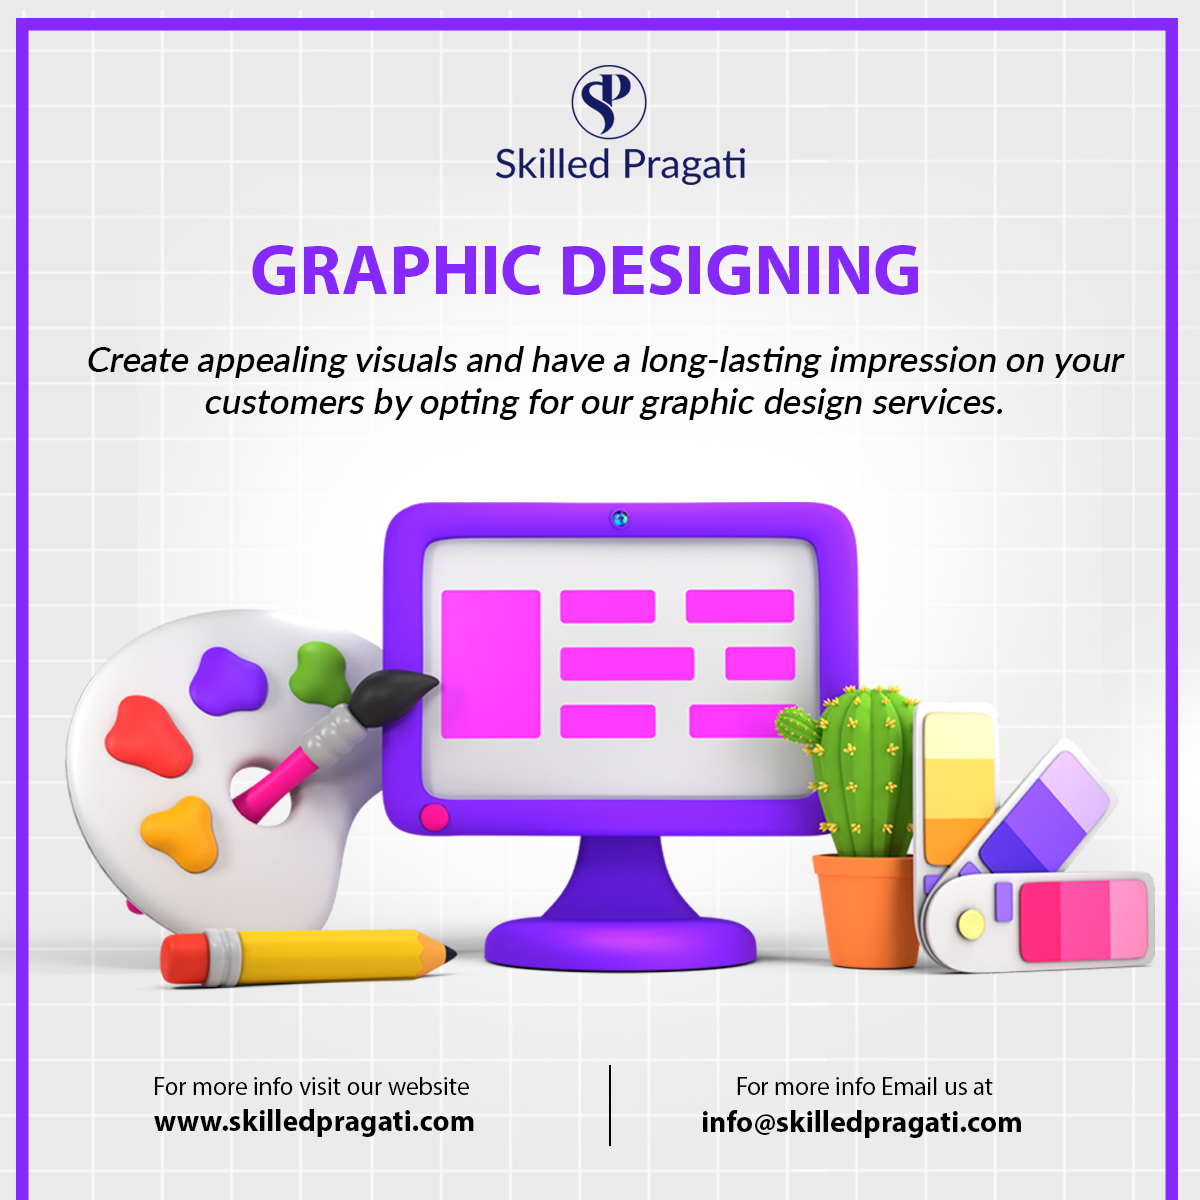 Design is the intermediary between information and understanding.

Website: skilledpragati.com
Email: Info@skilledpragati.com
Phone:- +1 (713) 955-7268

#GraphicDesign #designers #Webdesign #emailus